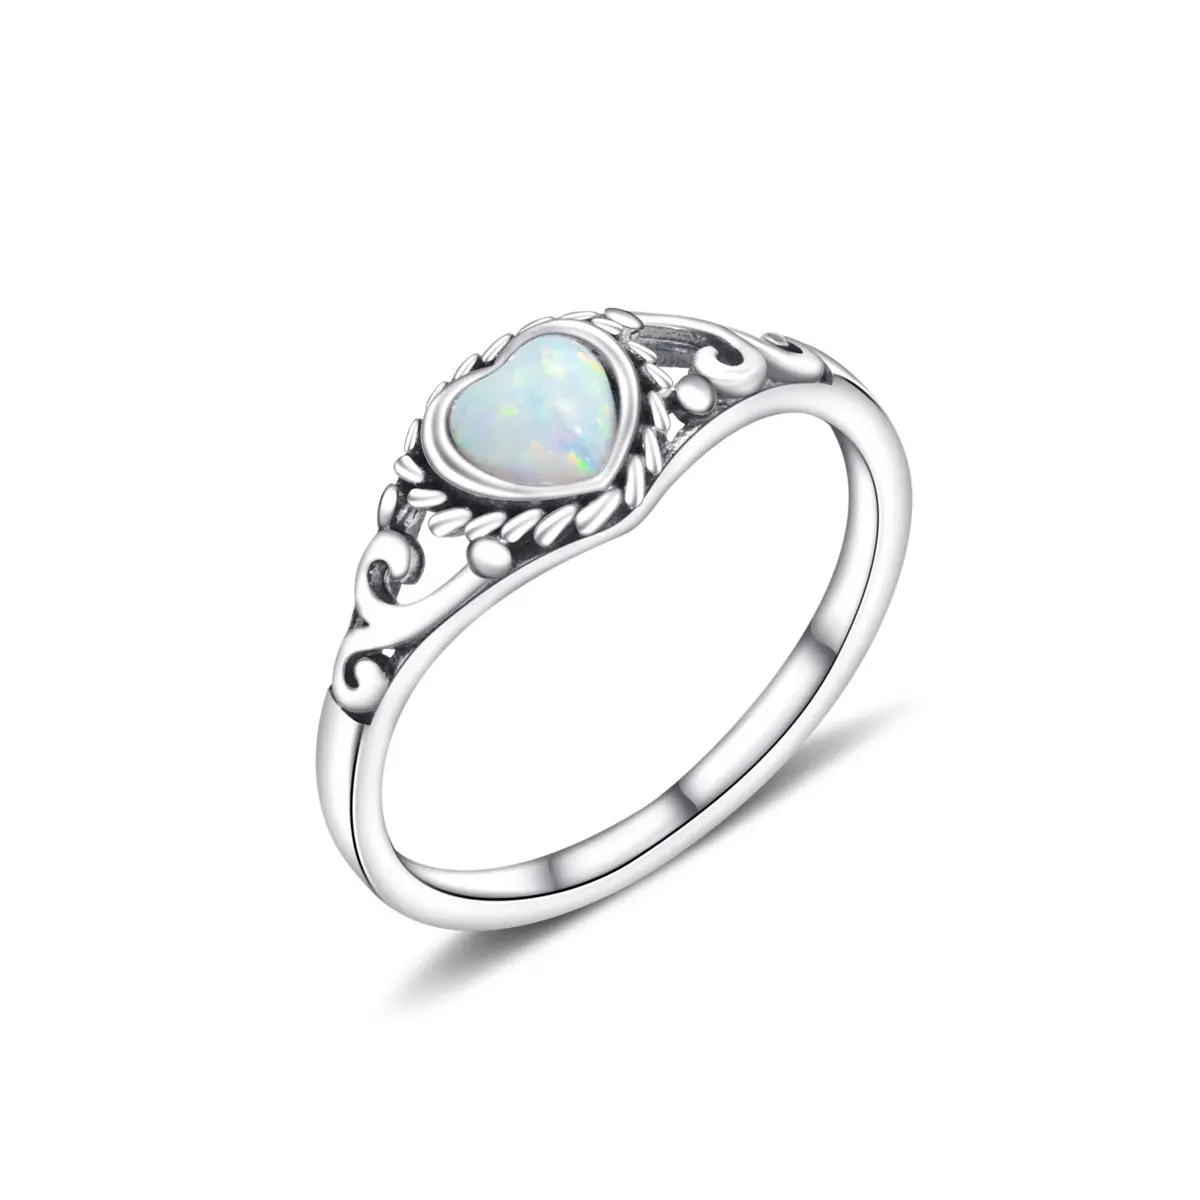 Pabrik grosir cincin perhiasan wanita 925 perak murni batu permata alami batu opal Hati klasik 925 cincin jari perak